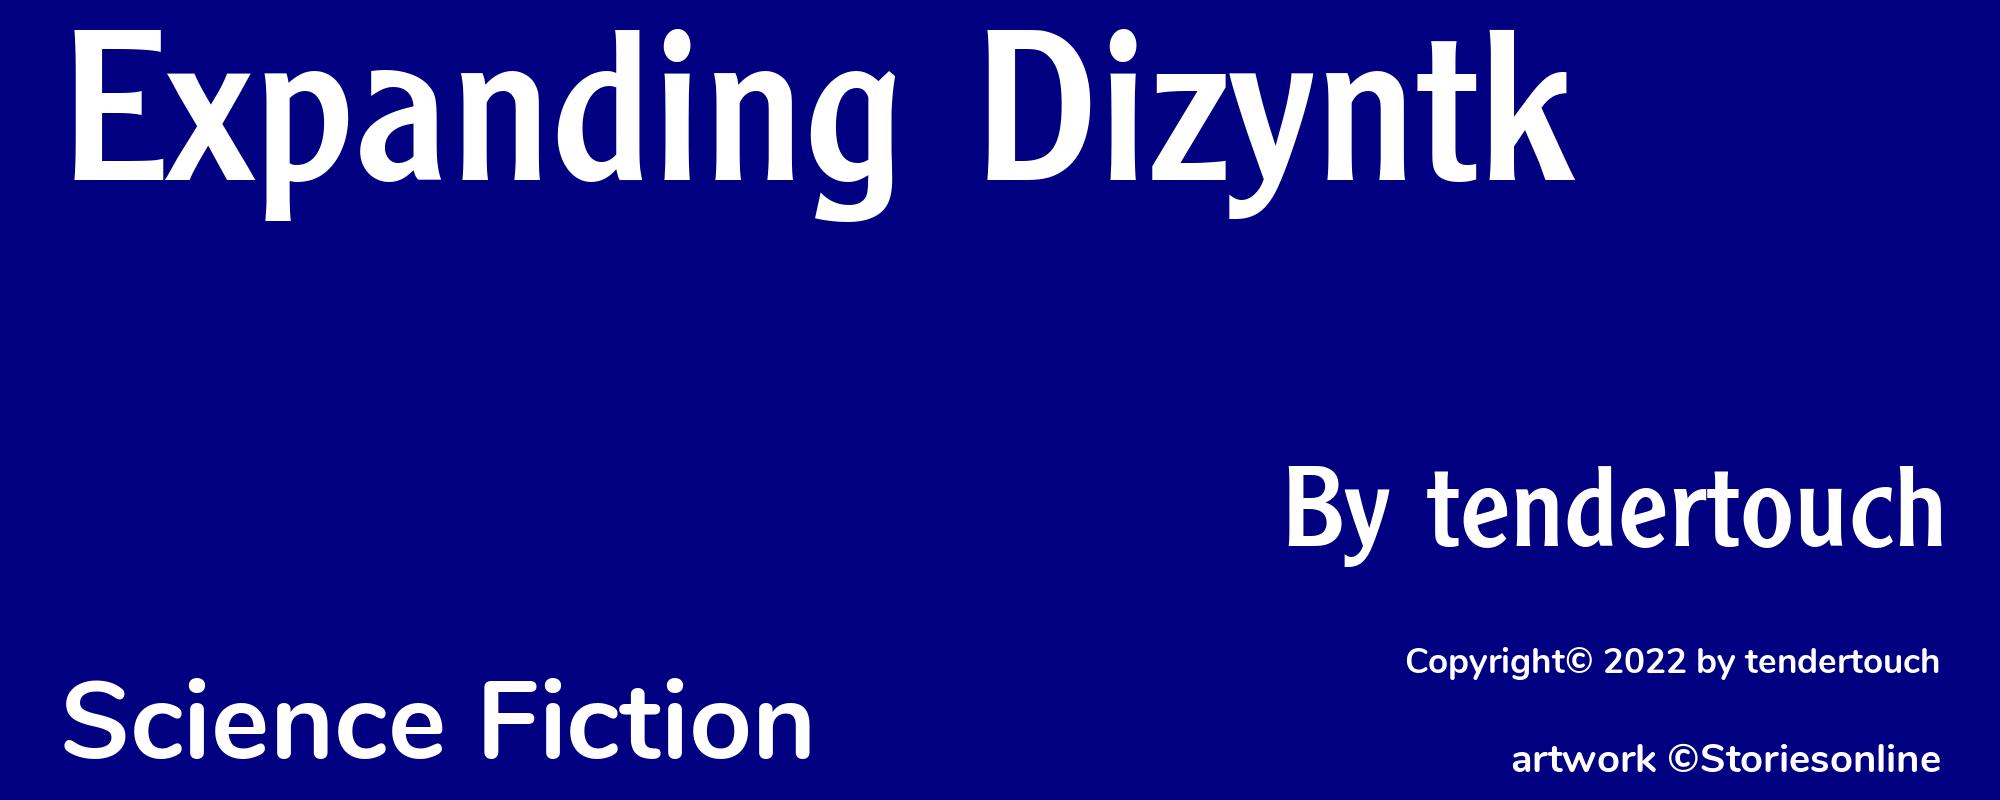 Expanding Dizyntk - Cover